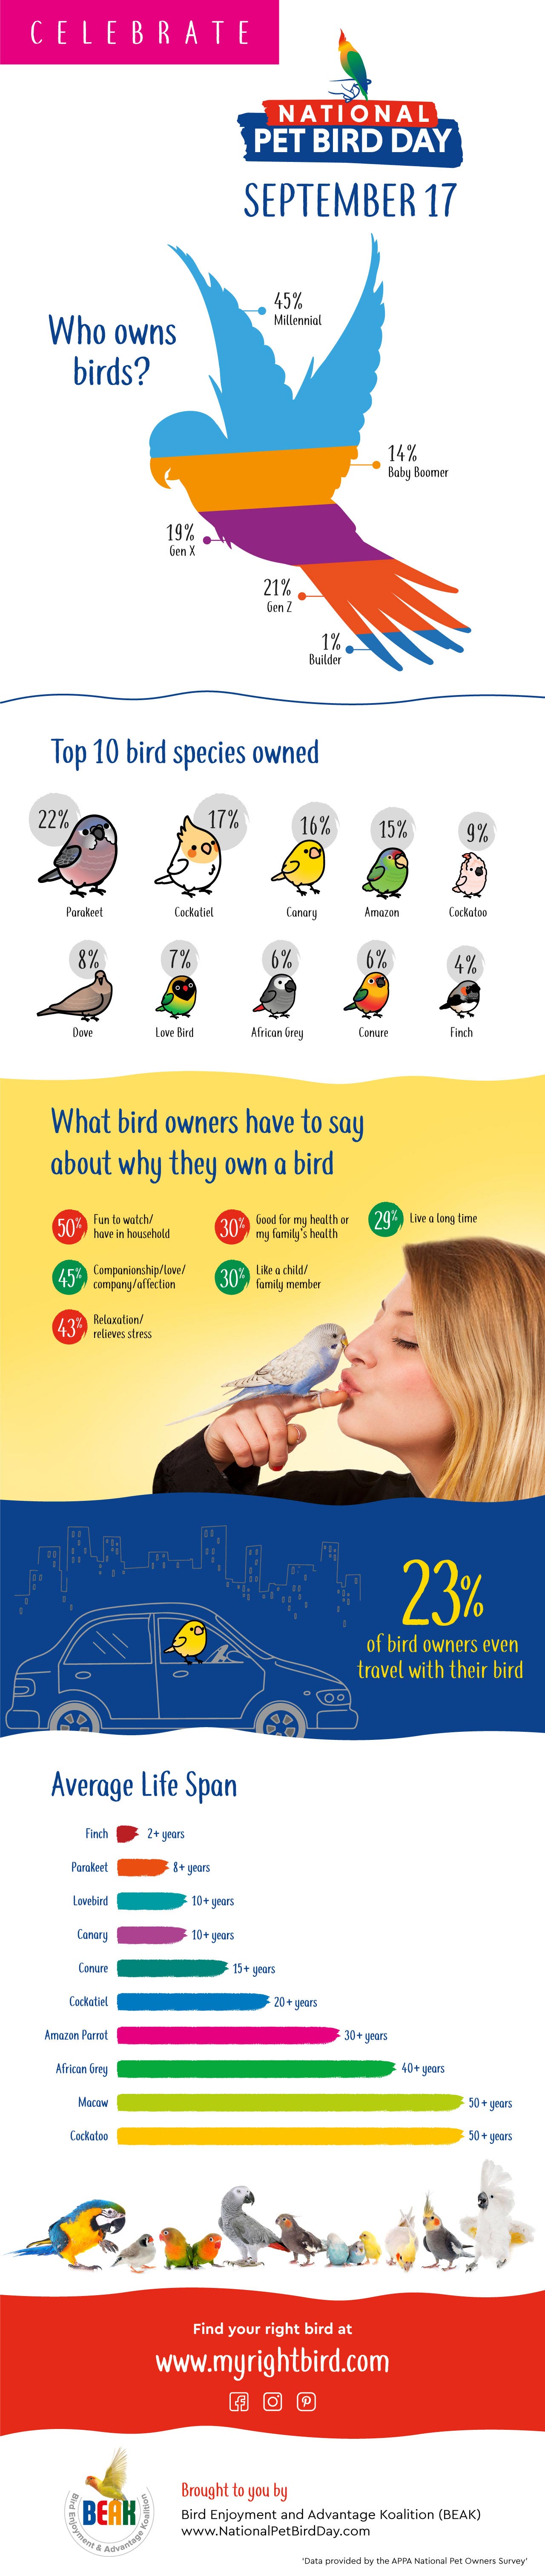 National Pet Bird Day infographic